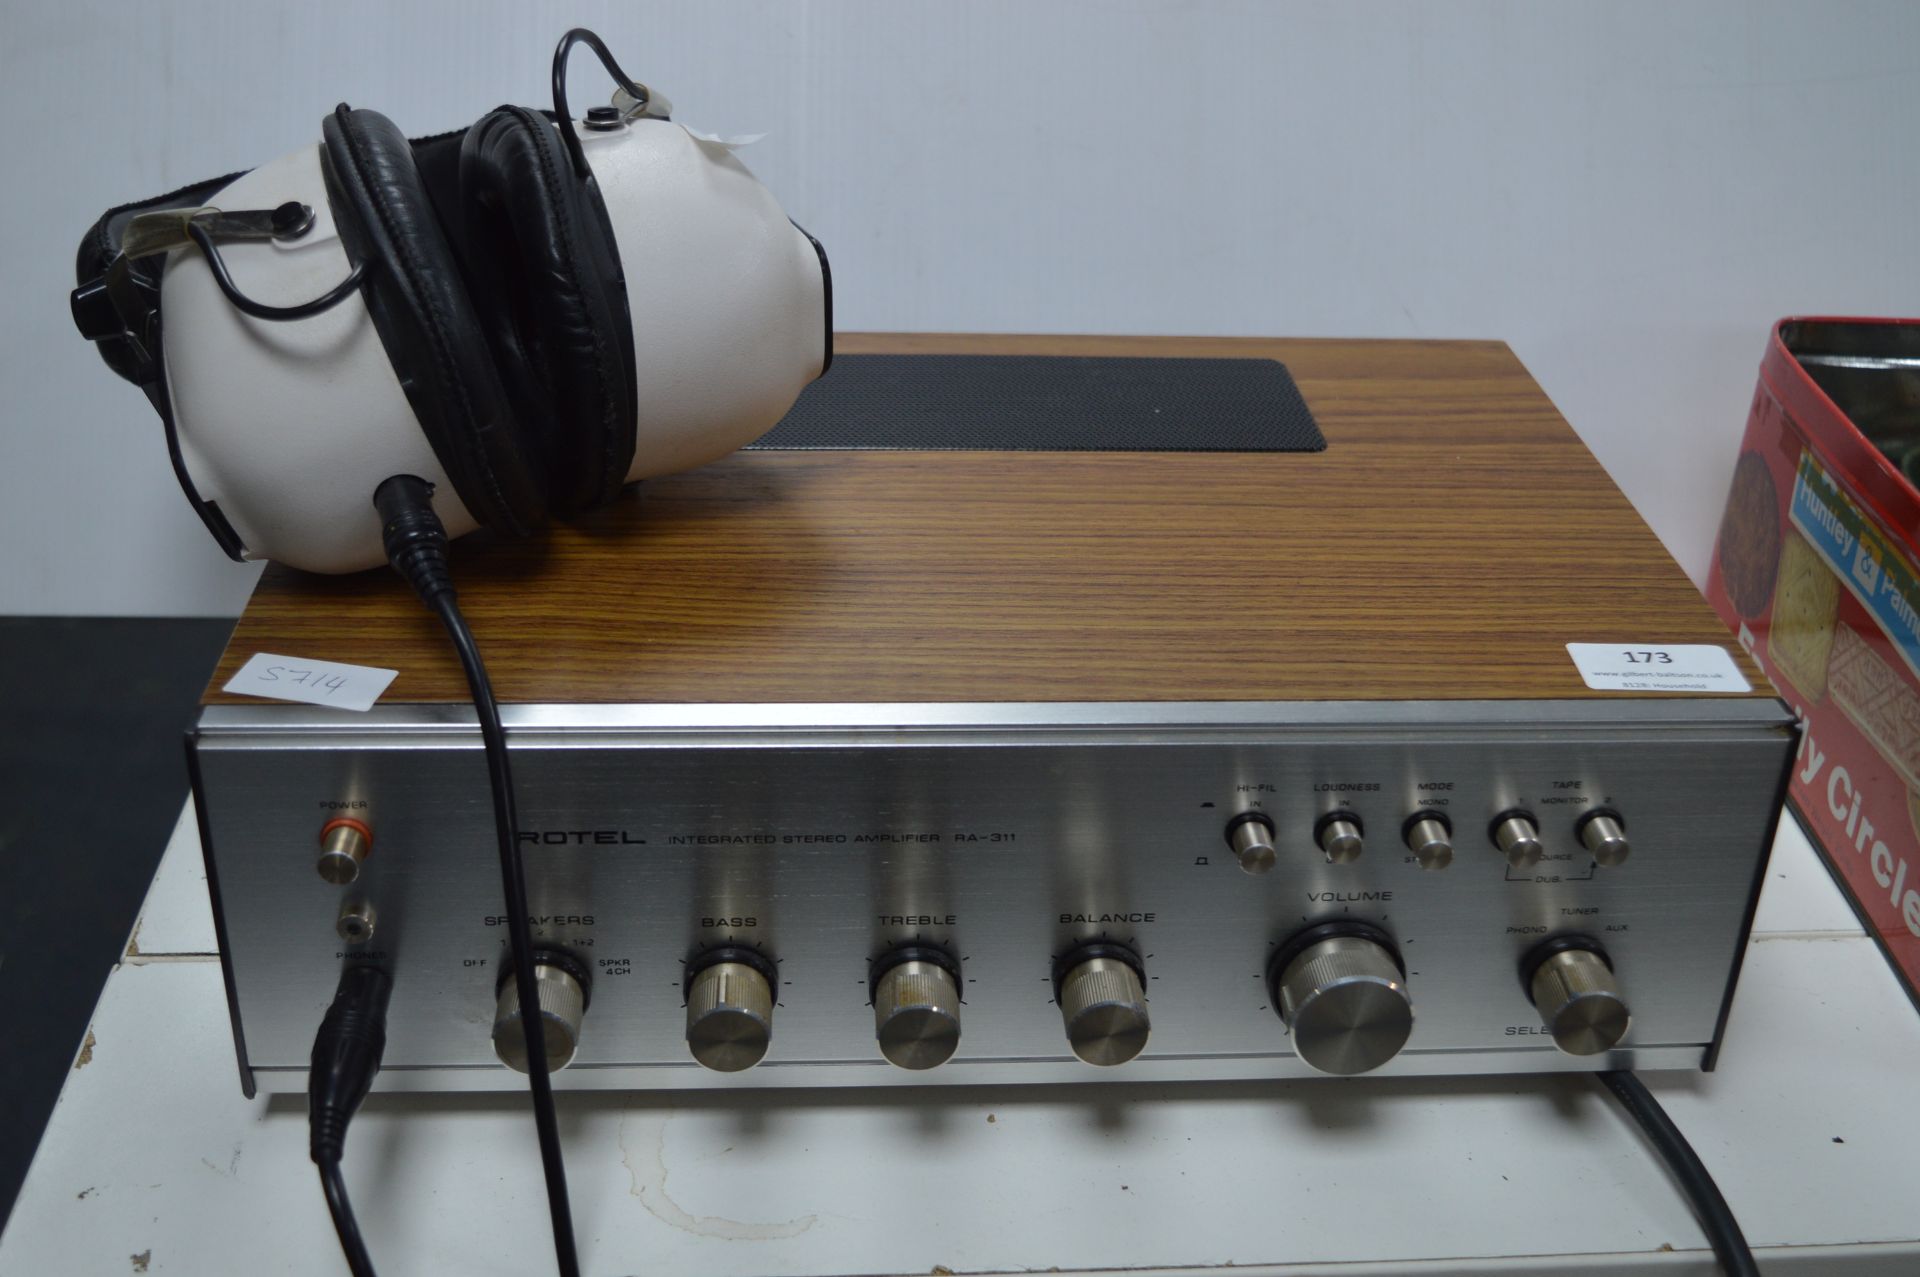 Rotelle Vintage Stereo Amplifier plus Headphones